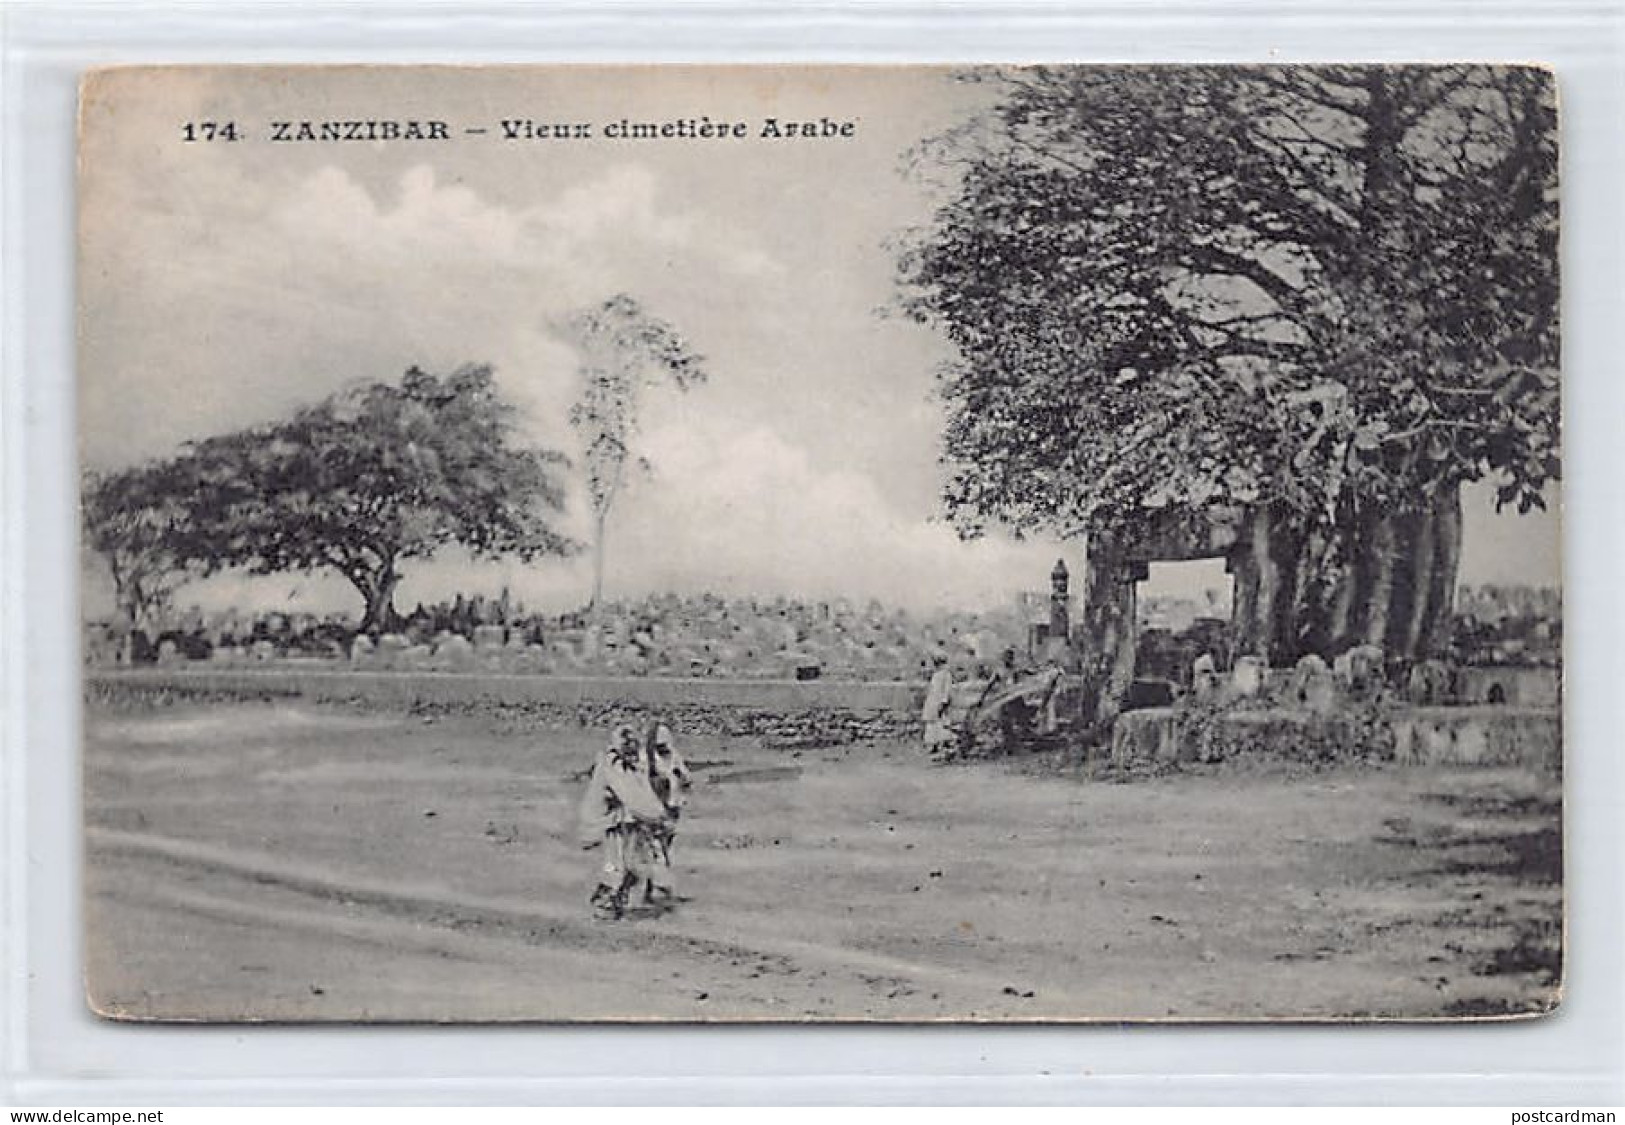 Zanzibar - Old Arab Cemetery - Publ. Messageries Maritimes 174 - Tanzania